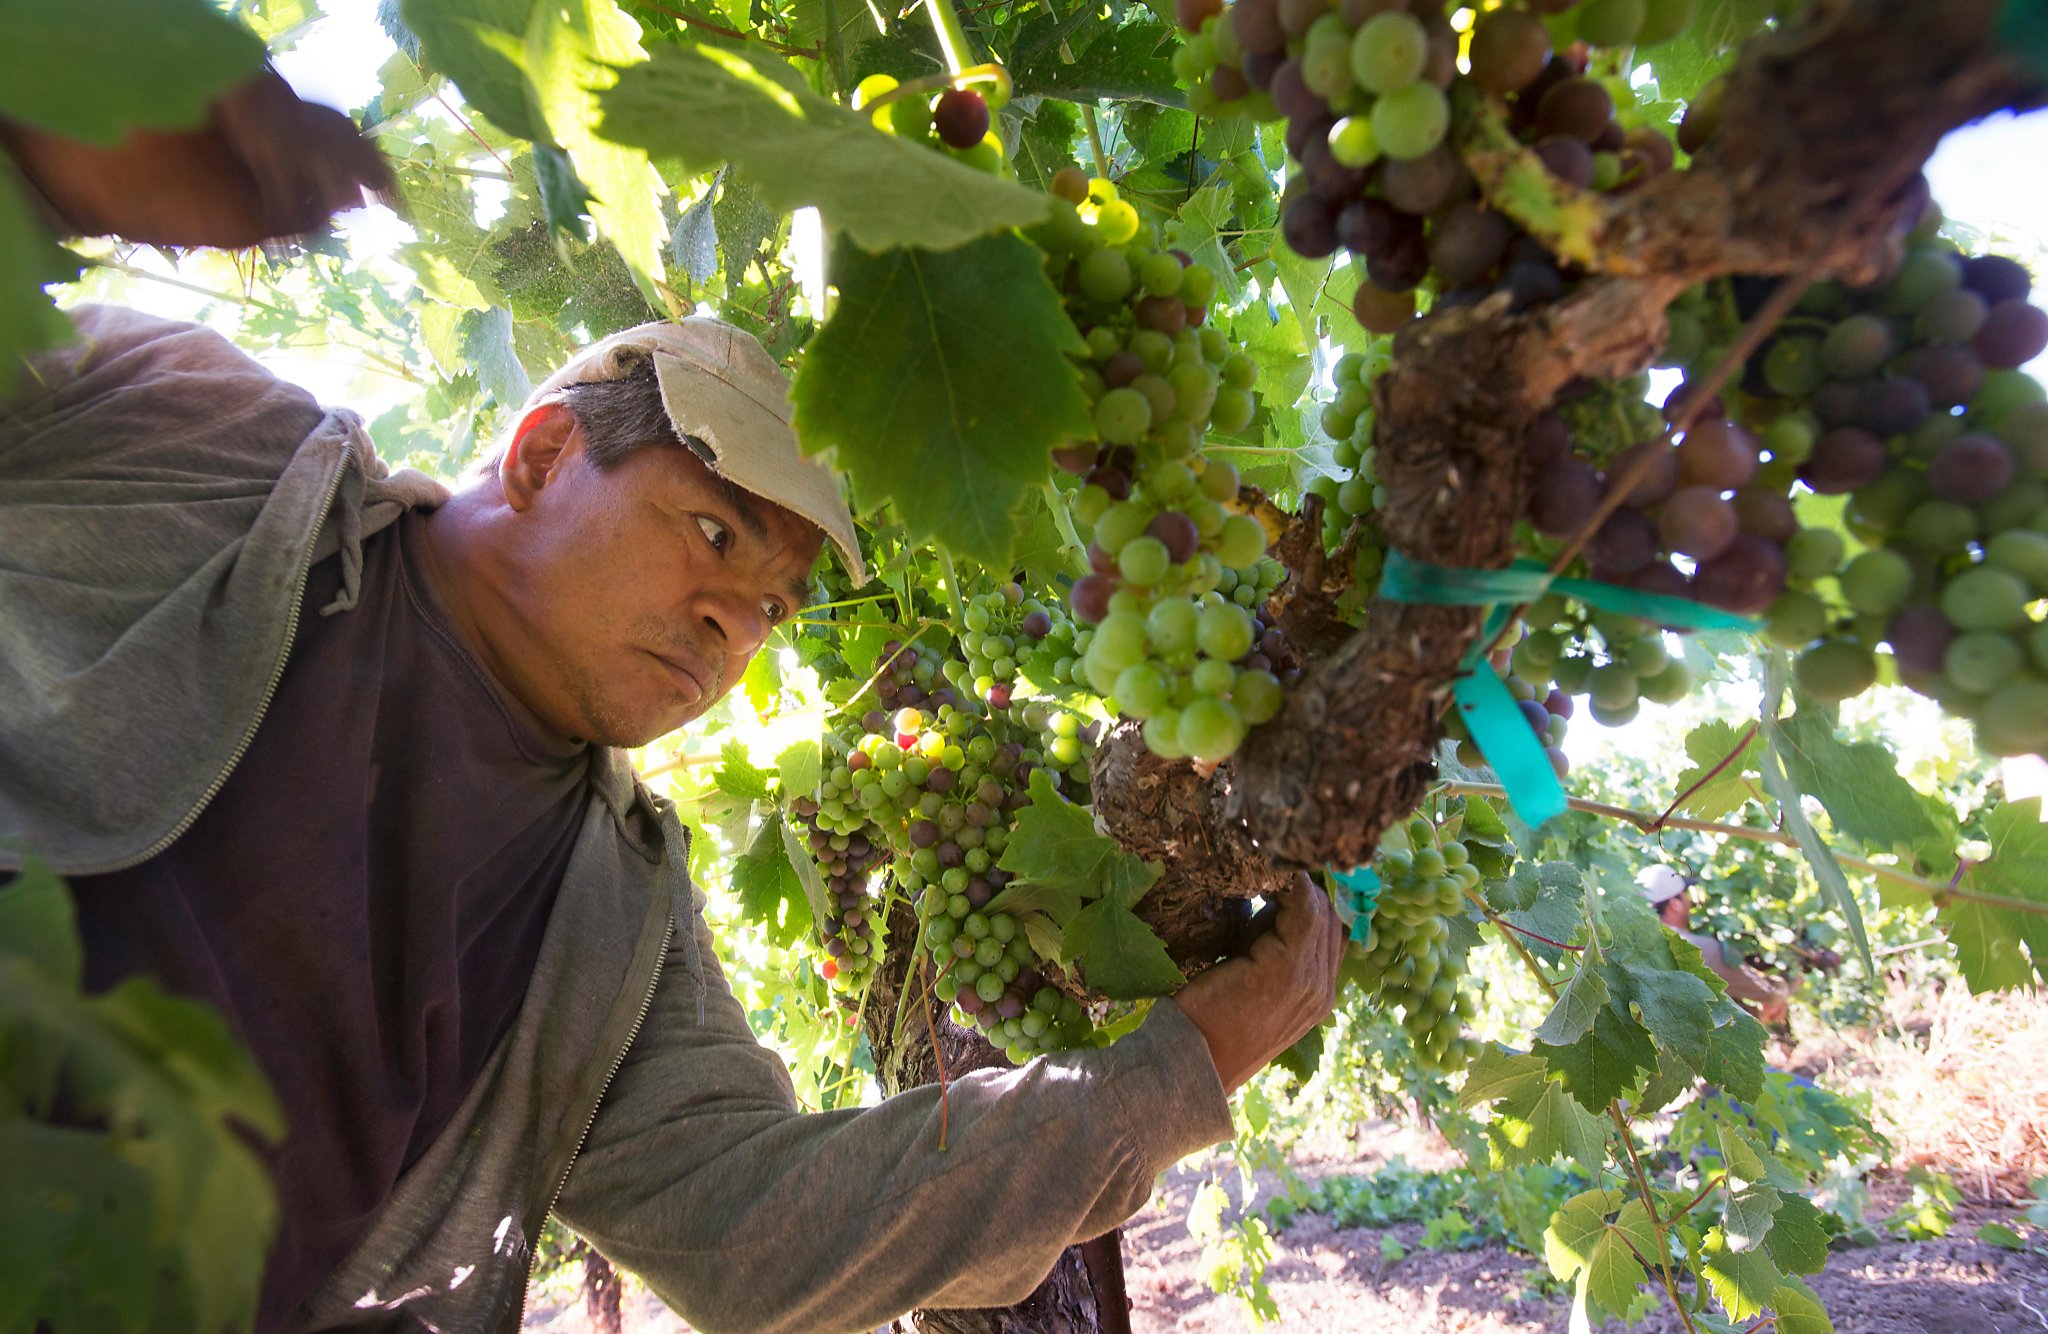 Guest worker visas a complex cure for vineyard labor shortage